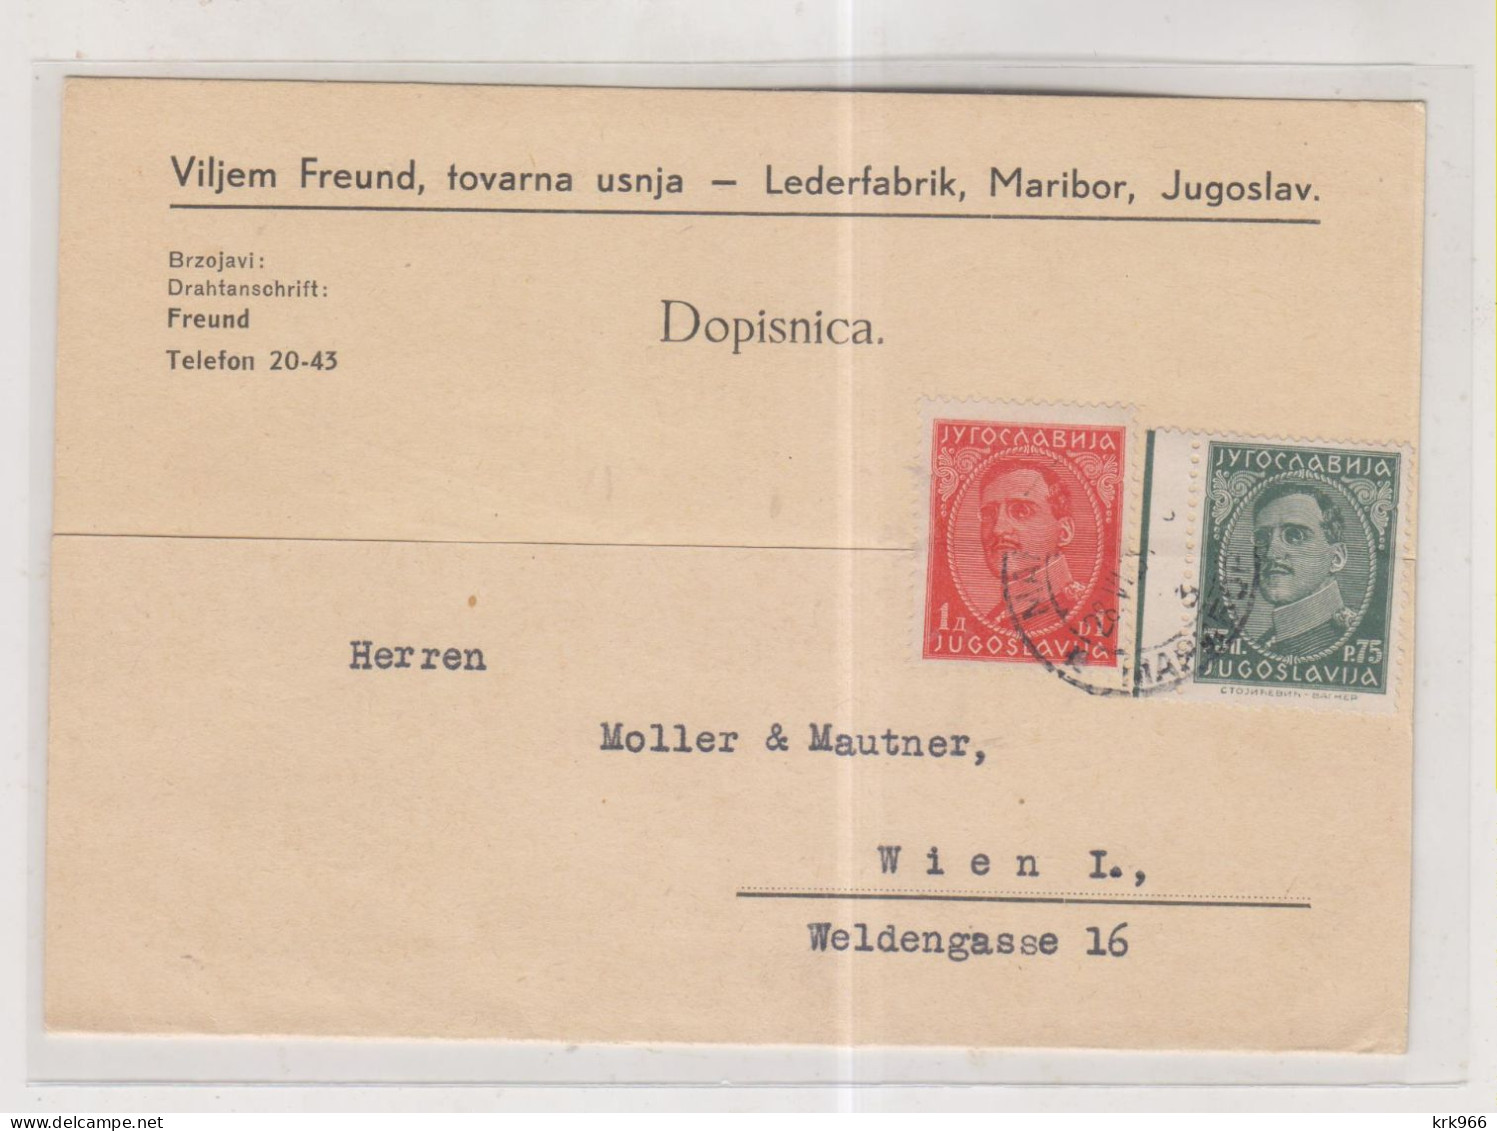 YUGOSLAVIA,1934 MARIBOR  Nice Postcard  To Austria - Covers & Documents